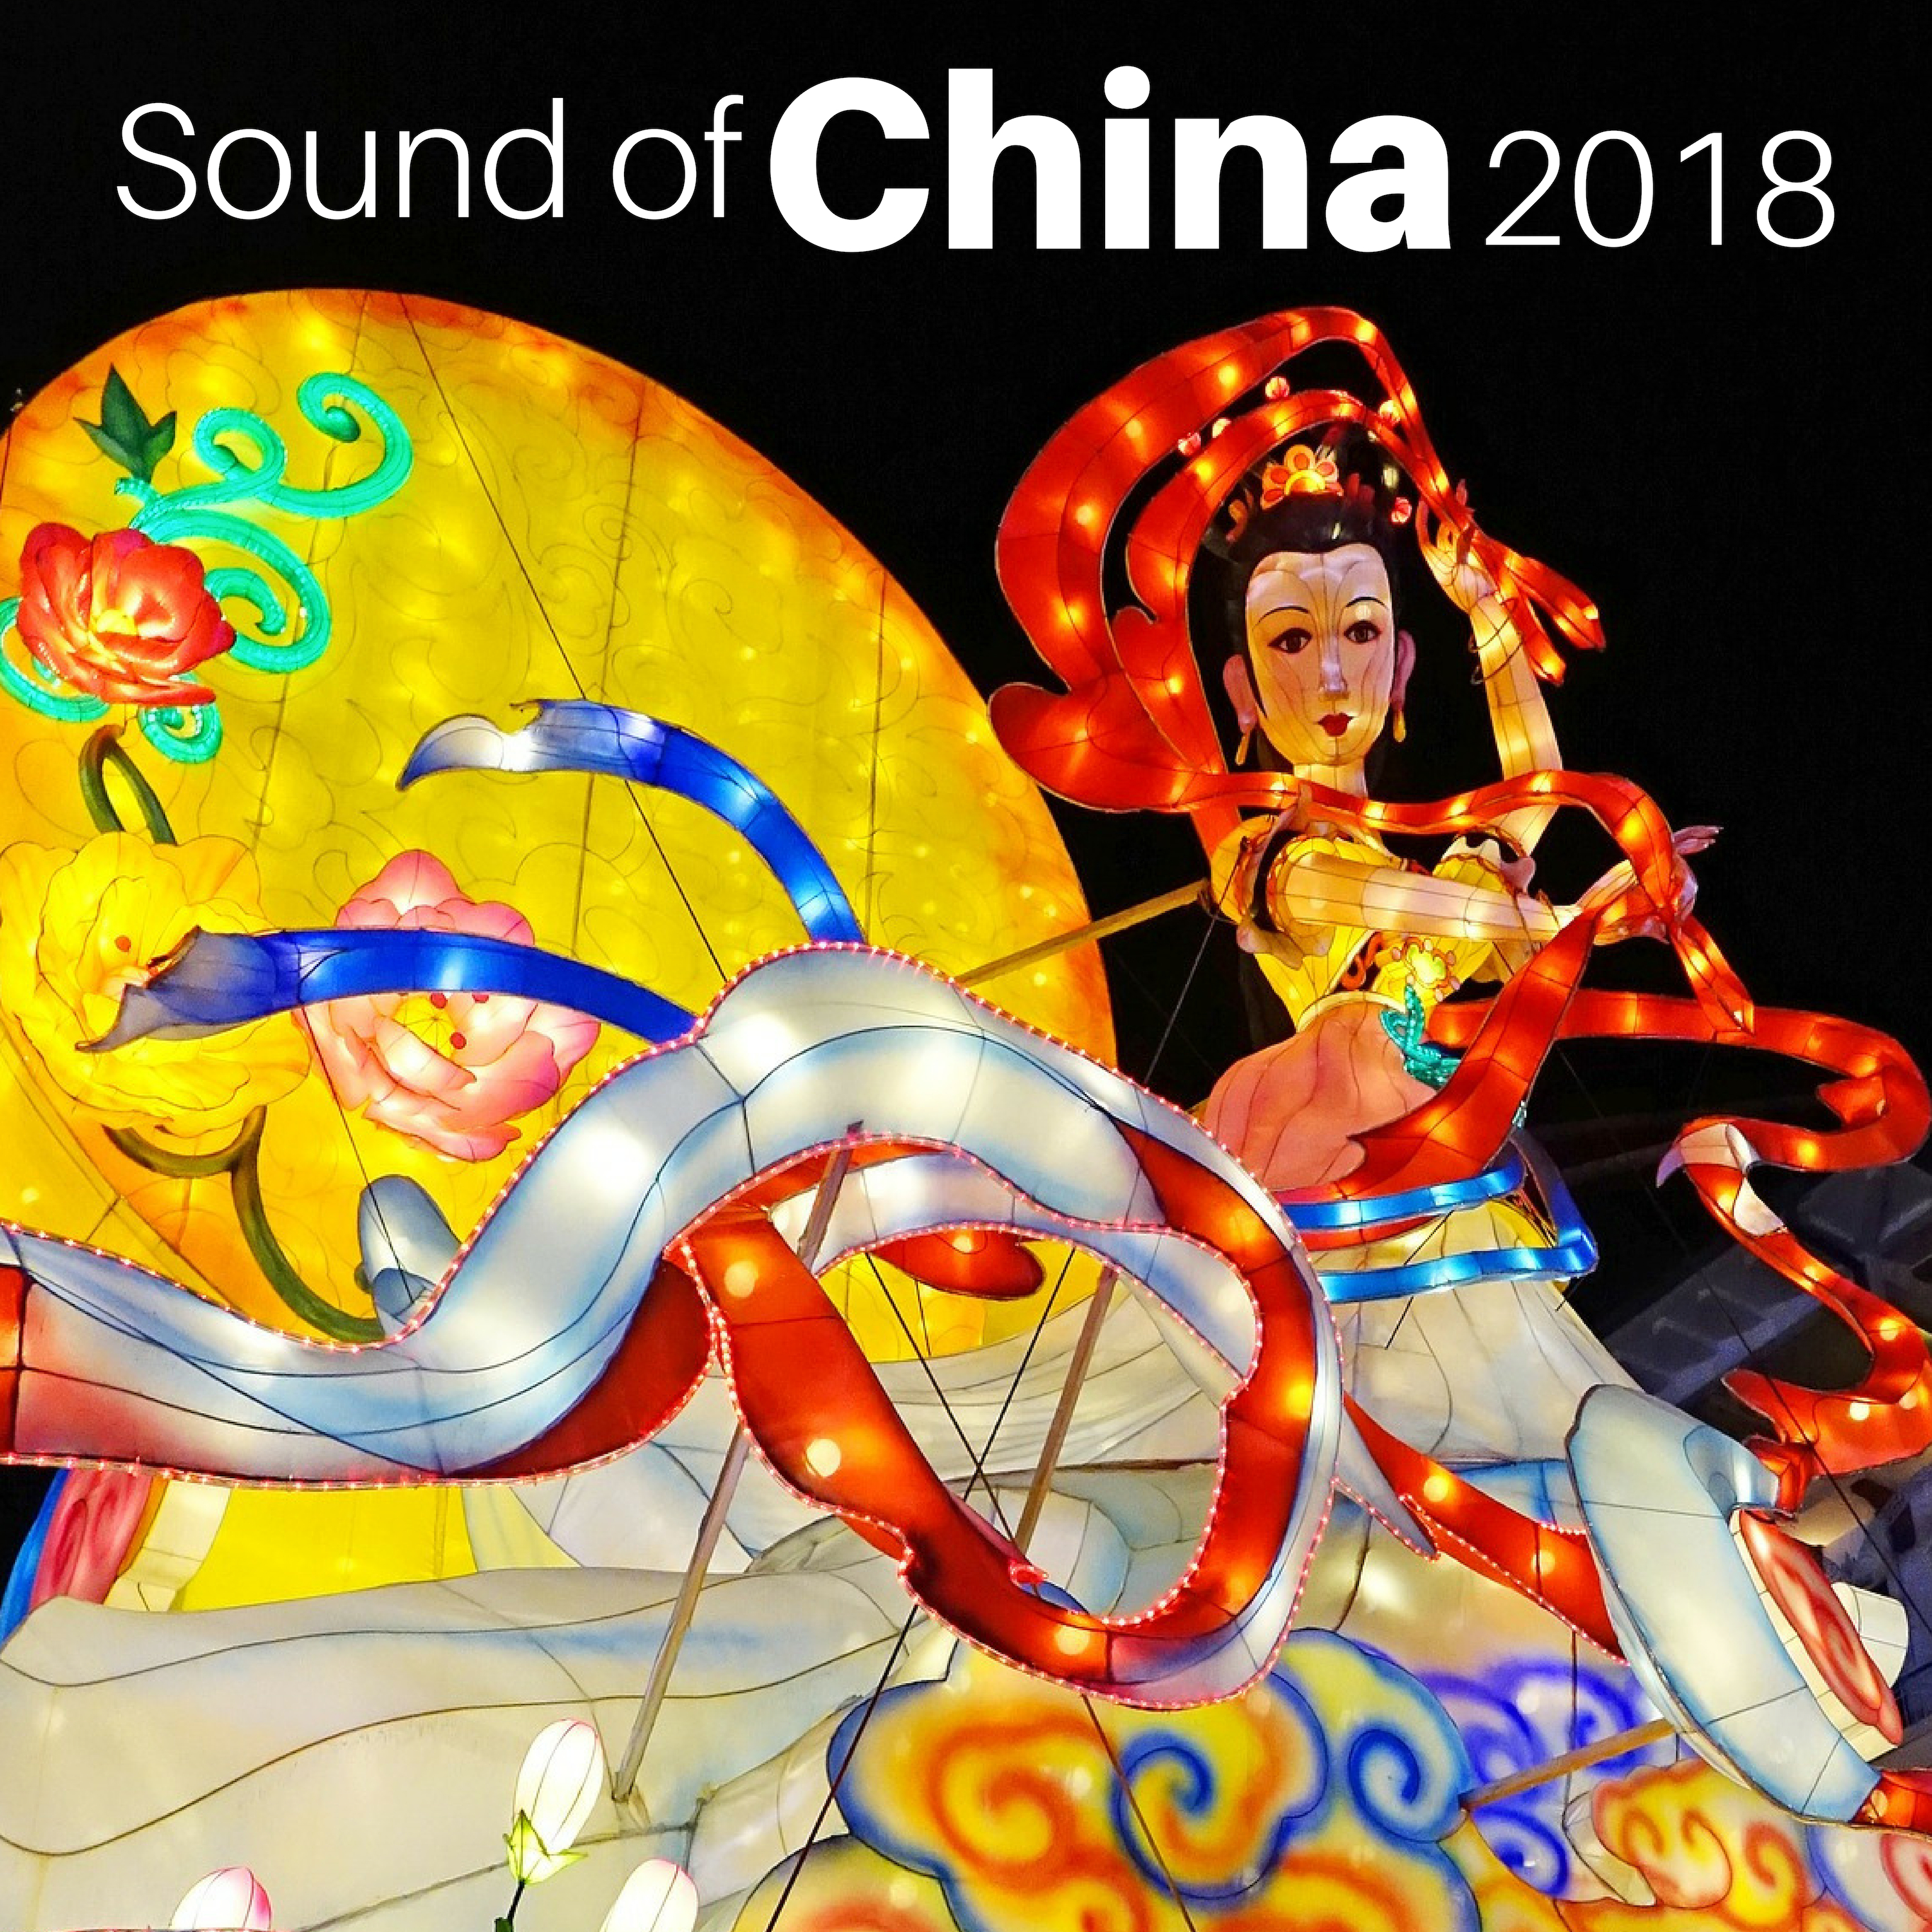 Sound of China 2018 - Guzheng Music for Relaxation, Meditation, Sleep